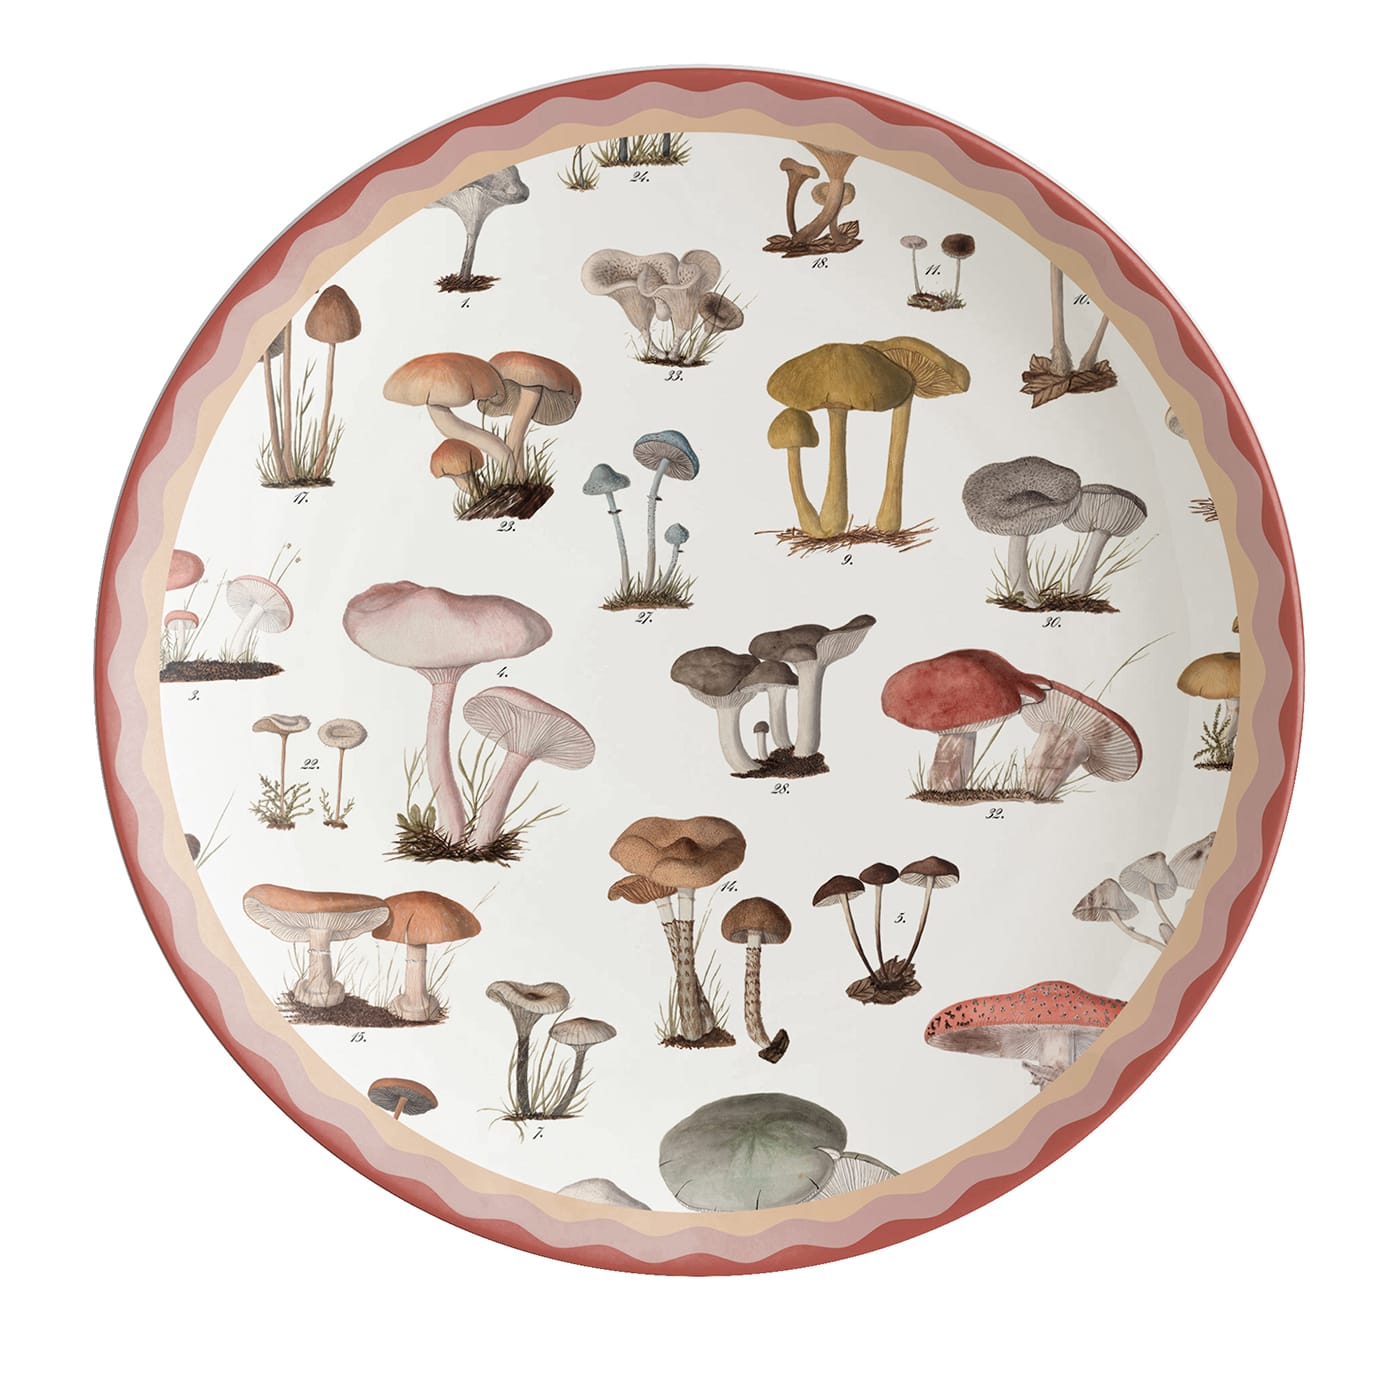 Cabinet de Curiosités Mushrooms Dinner Plate - Grand Tour by Vito Nesta